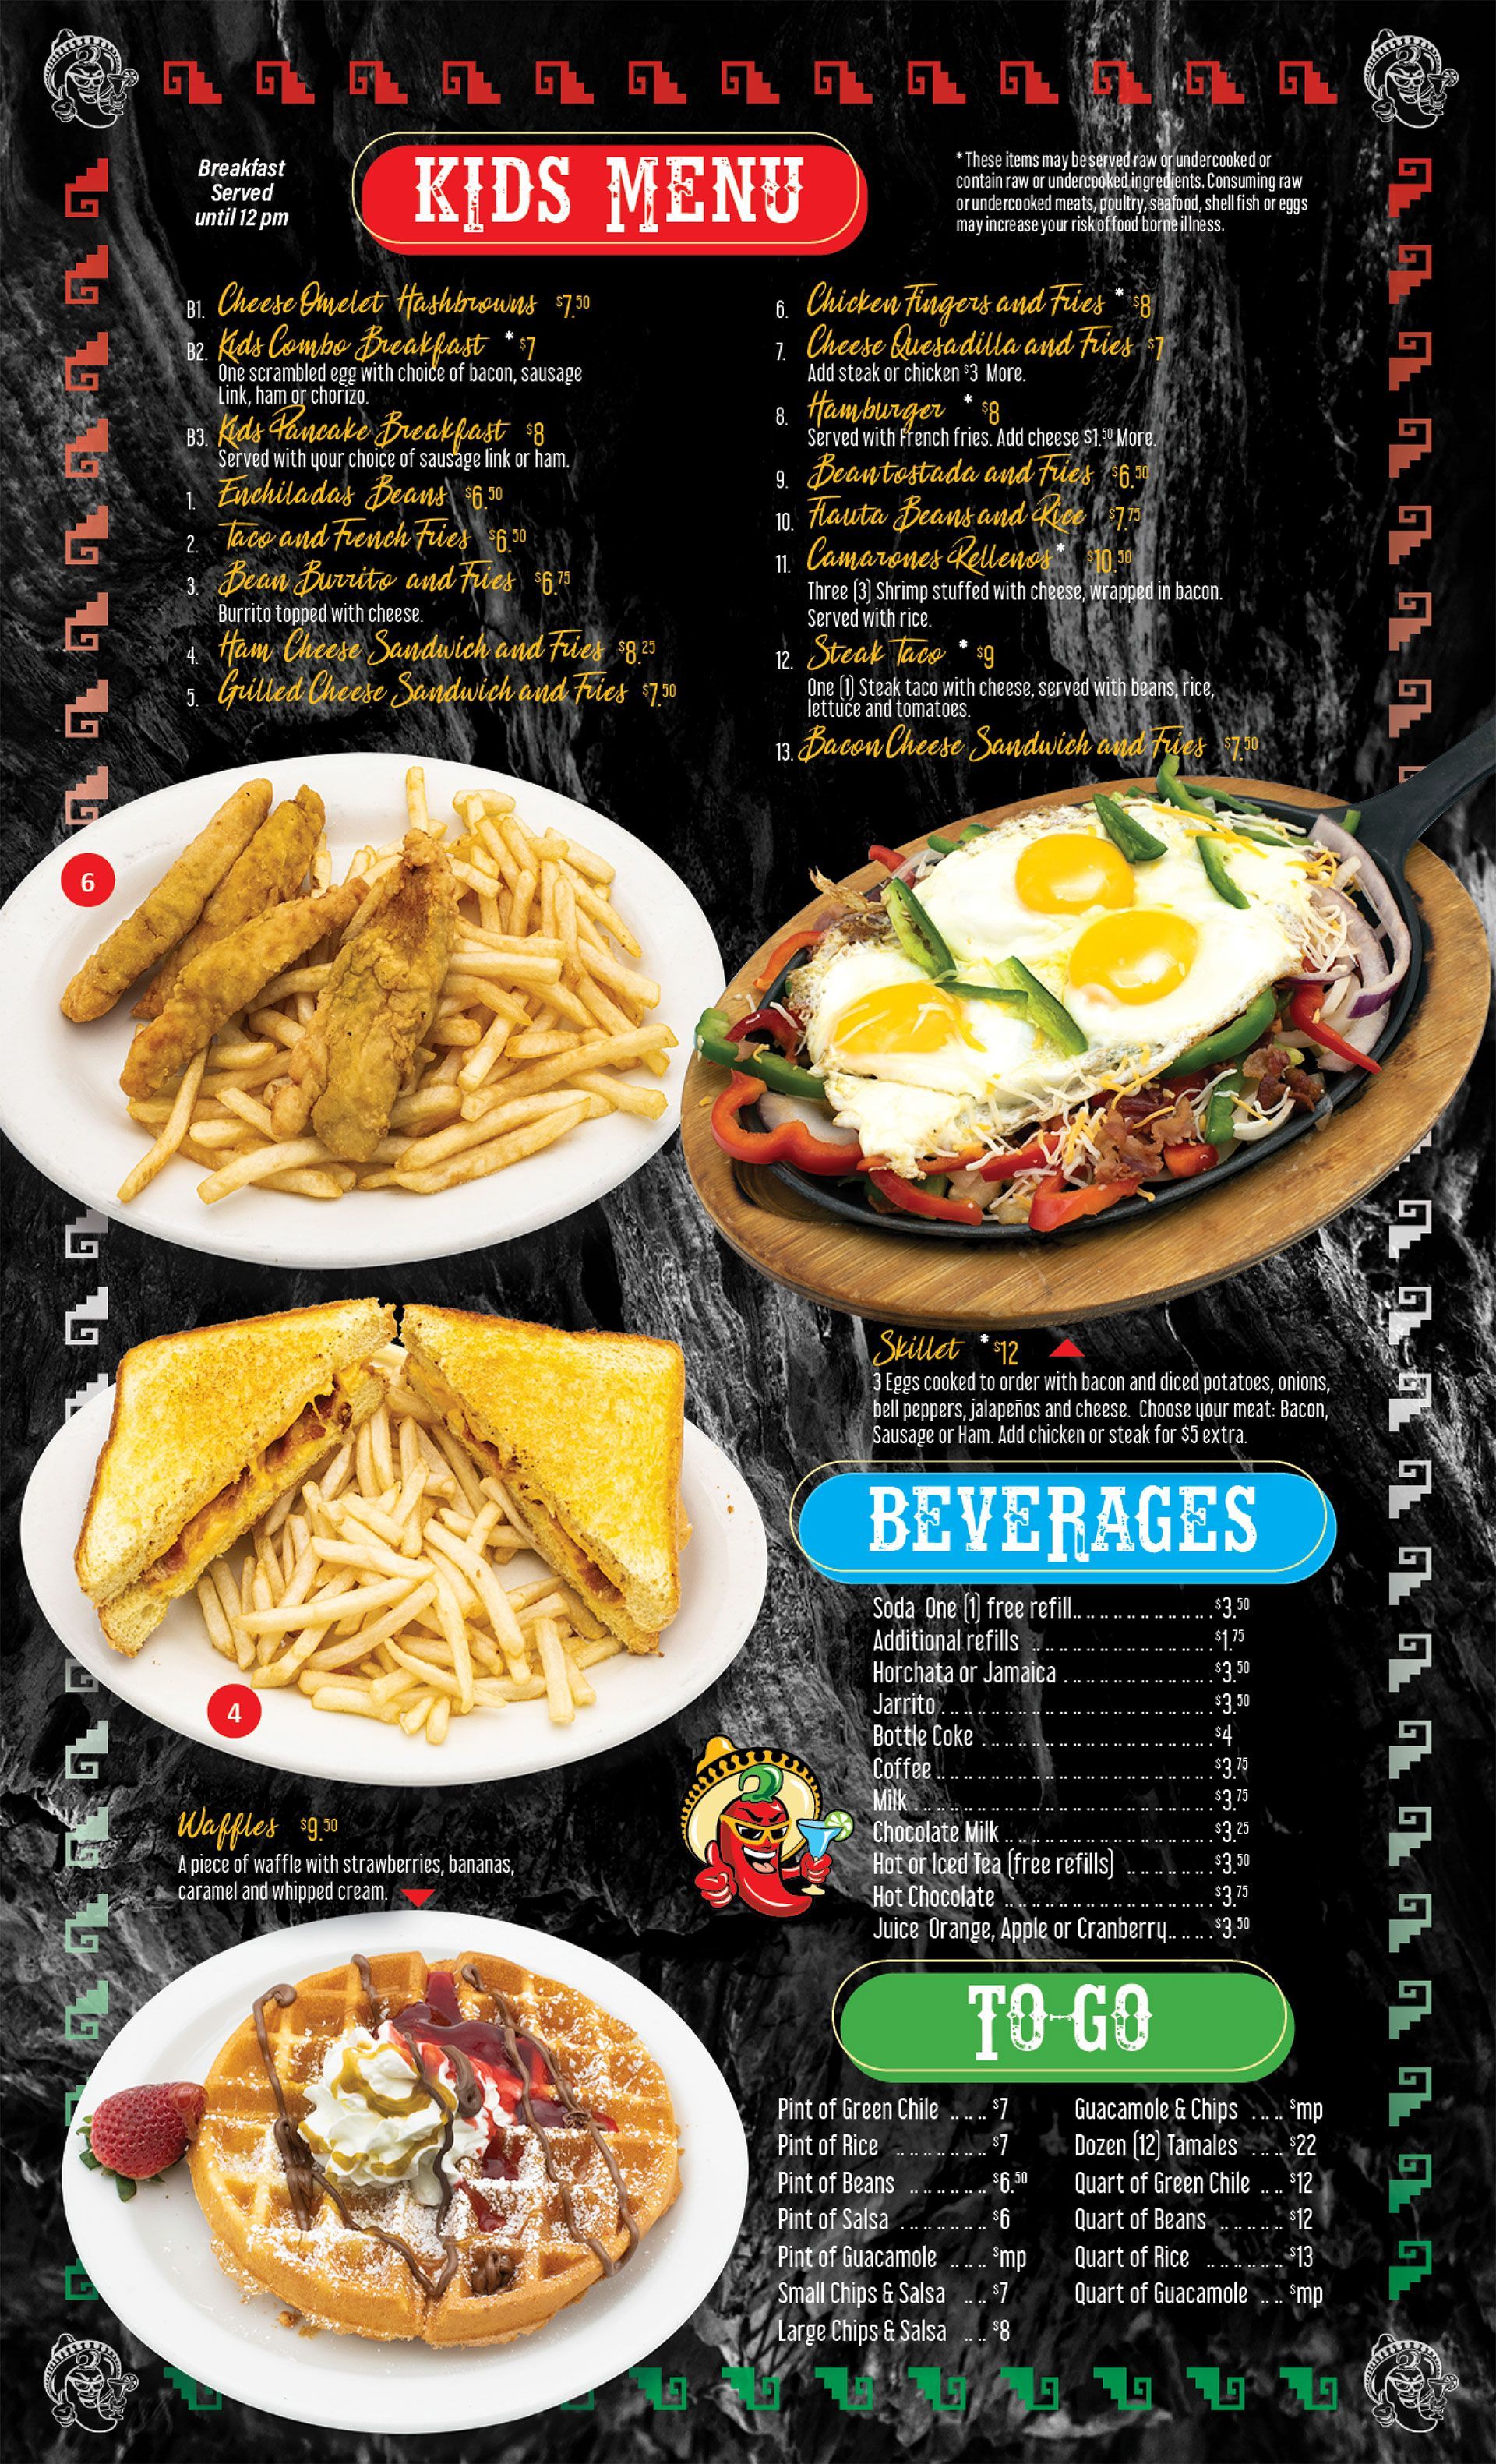 Chakas Mexican Restaurant  - Breakfast menu - Kids, Beverages, and To-Go menus